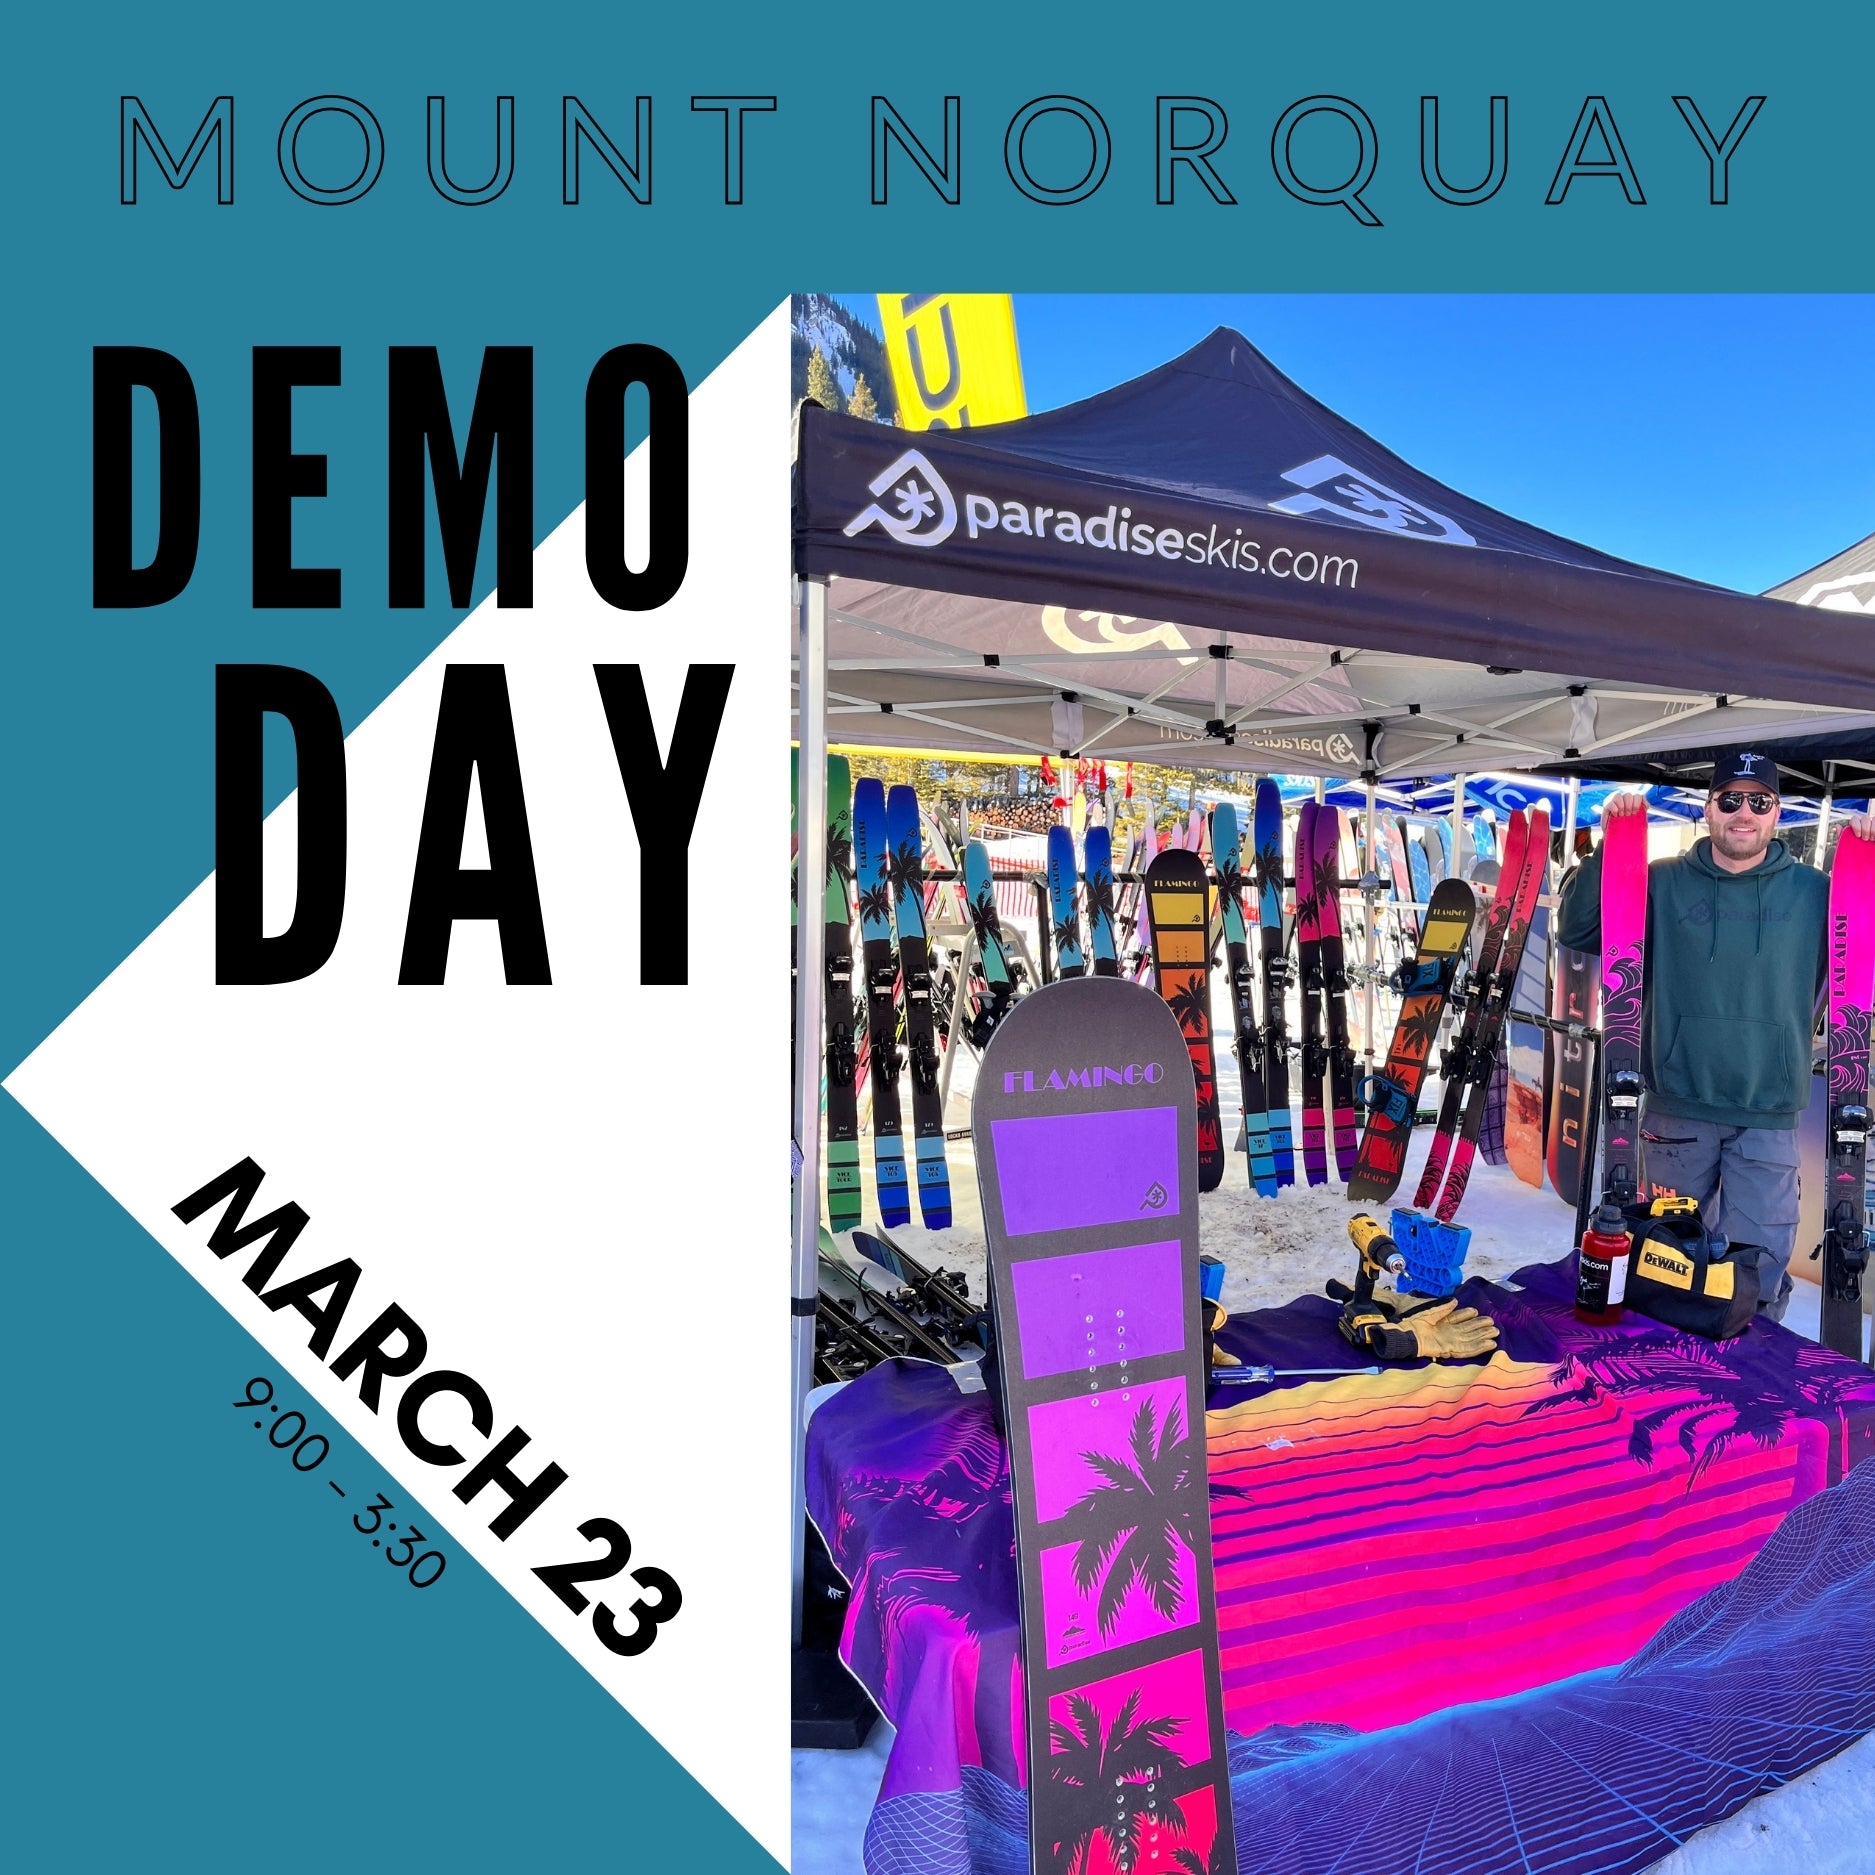 Paradise Skis offering free public ski and snowboard demos at Mount Norquay ski resort in Banff 